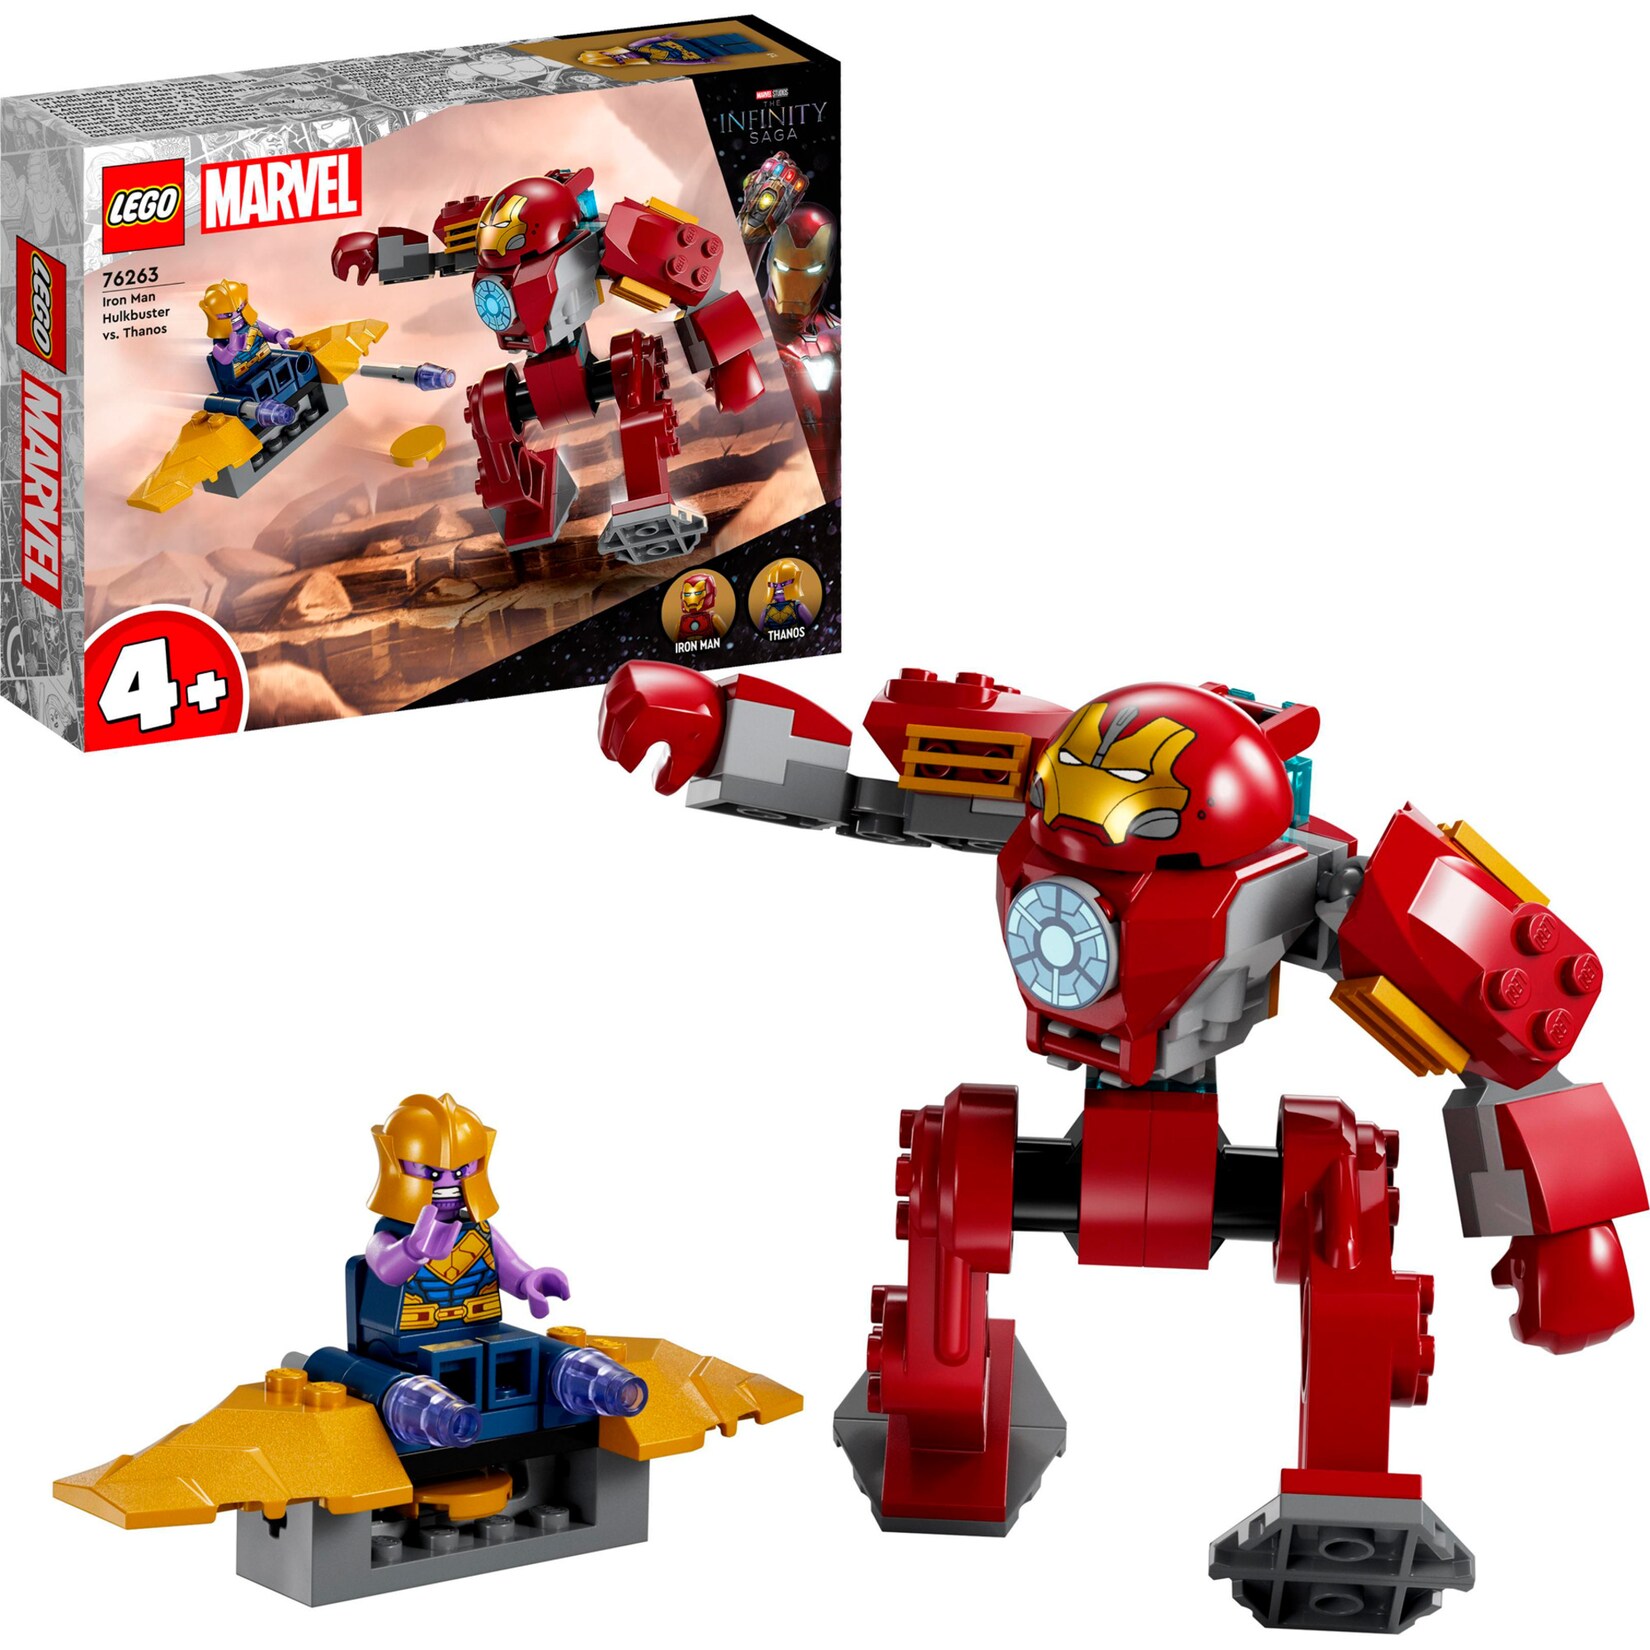 LEGO Konstruktionsspielzeug Marvel Super Heroes Iron Man Hulkbuster vs. Thanos